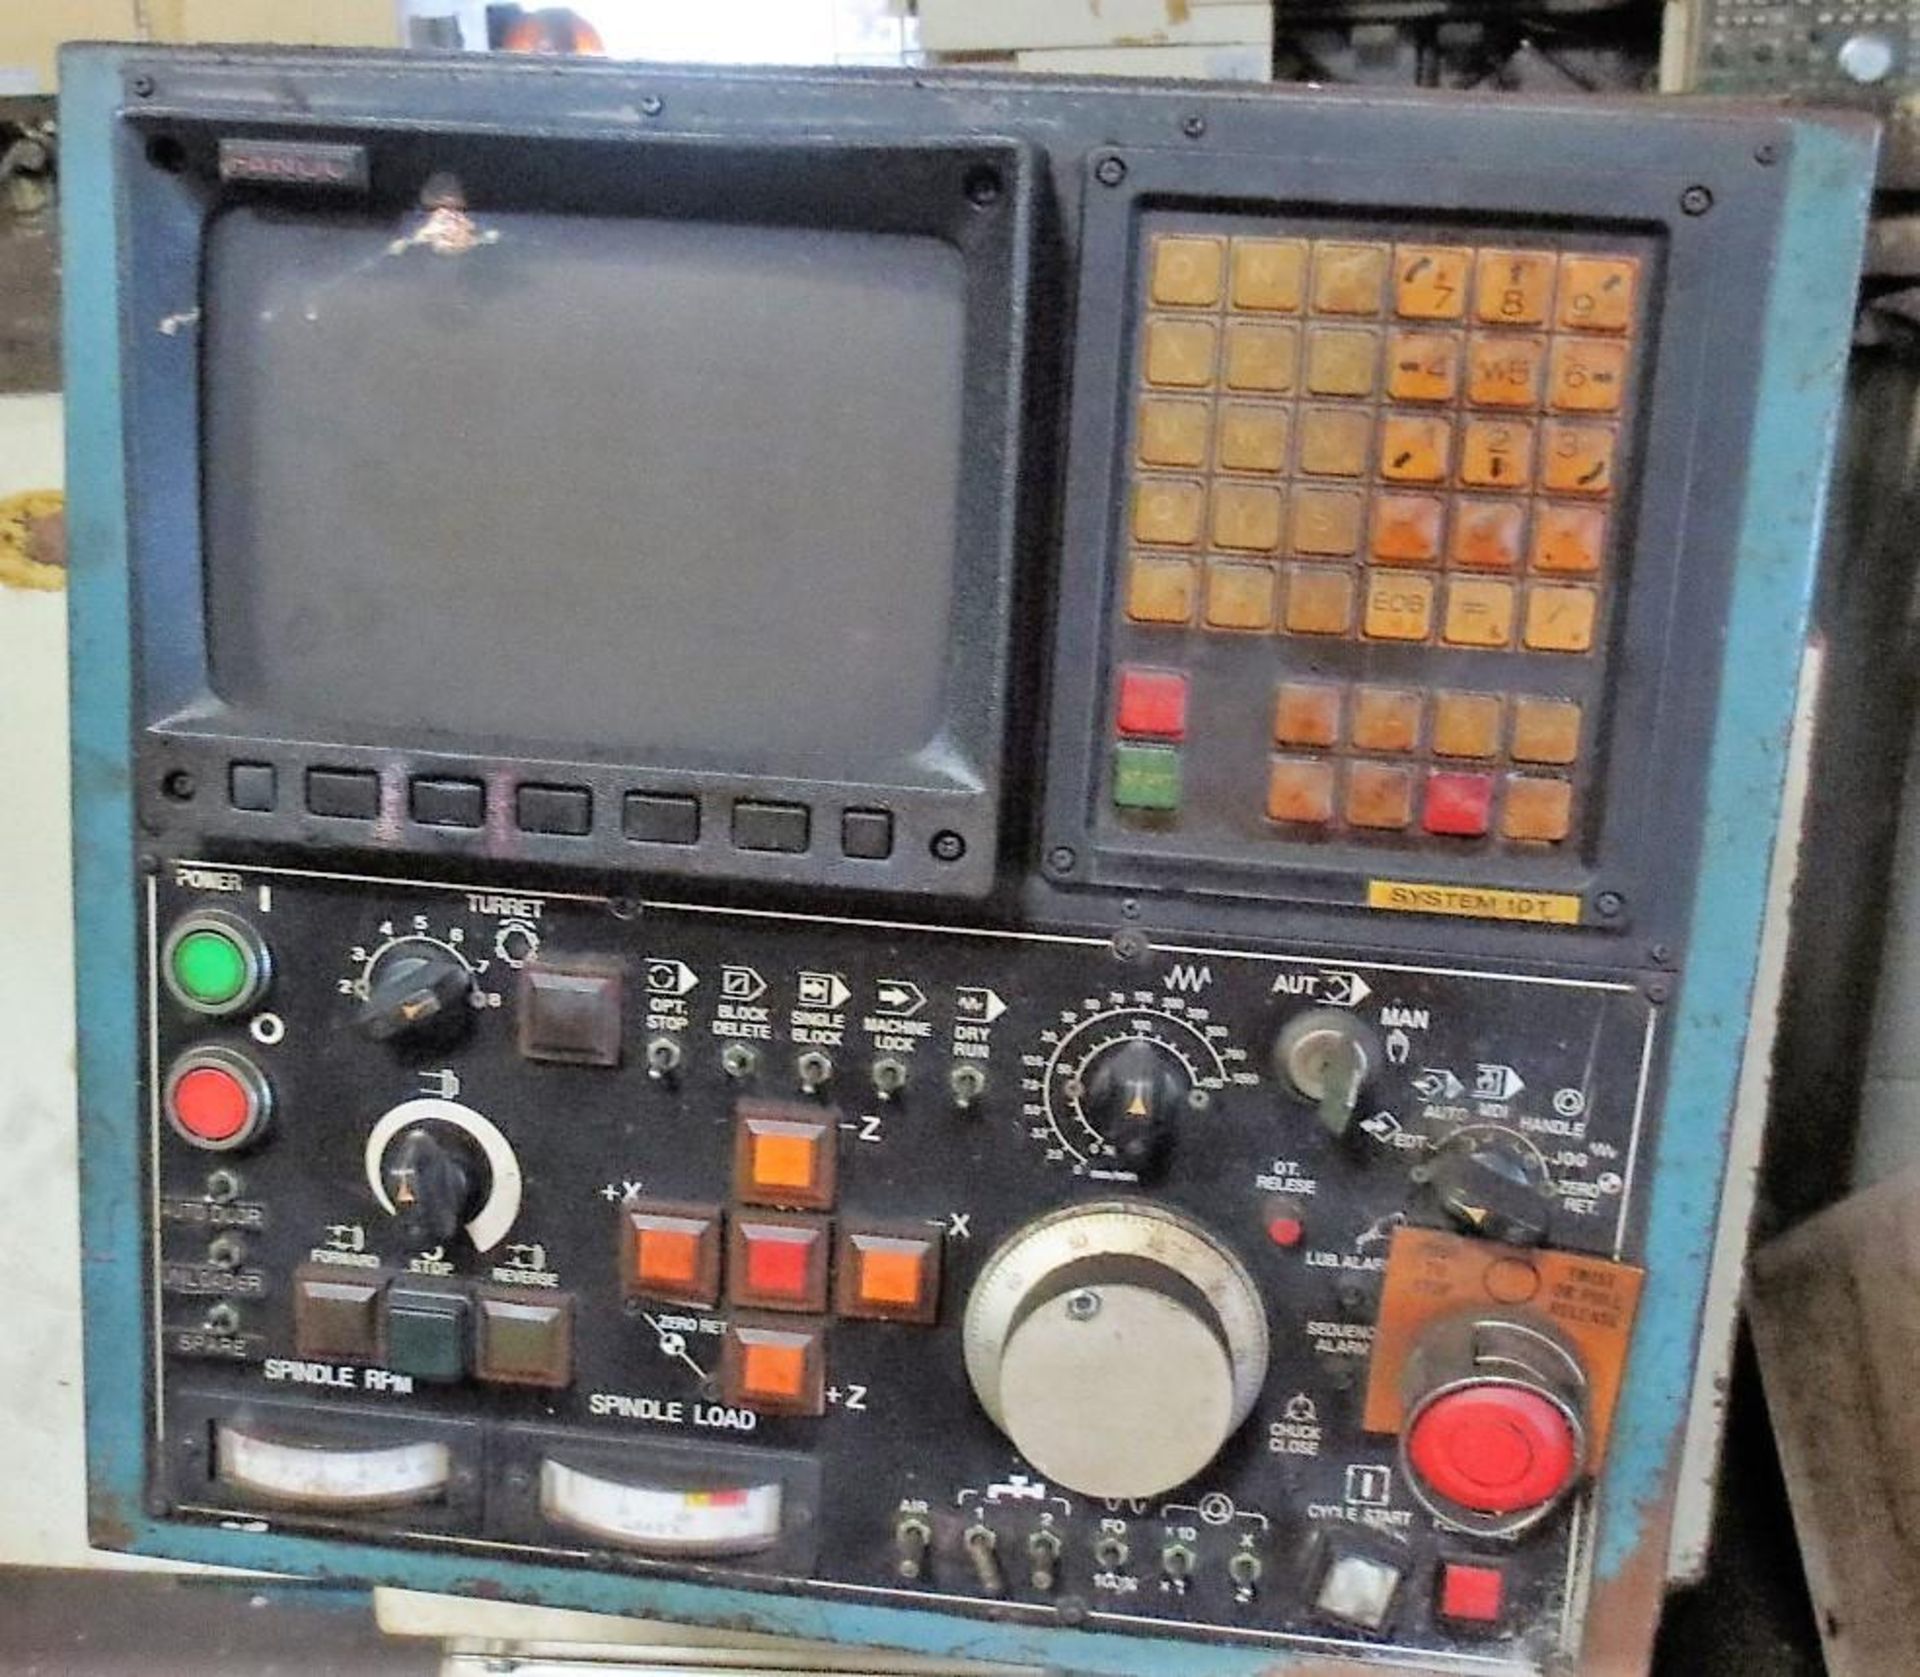 Takamatsu Model TKK-2S Spindle CNC Chucker S/N: 8512-902 Fanuc 10T CNC Control. Loading Fee is $350. - Image 2 of 10